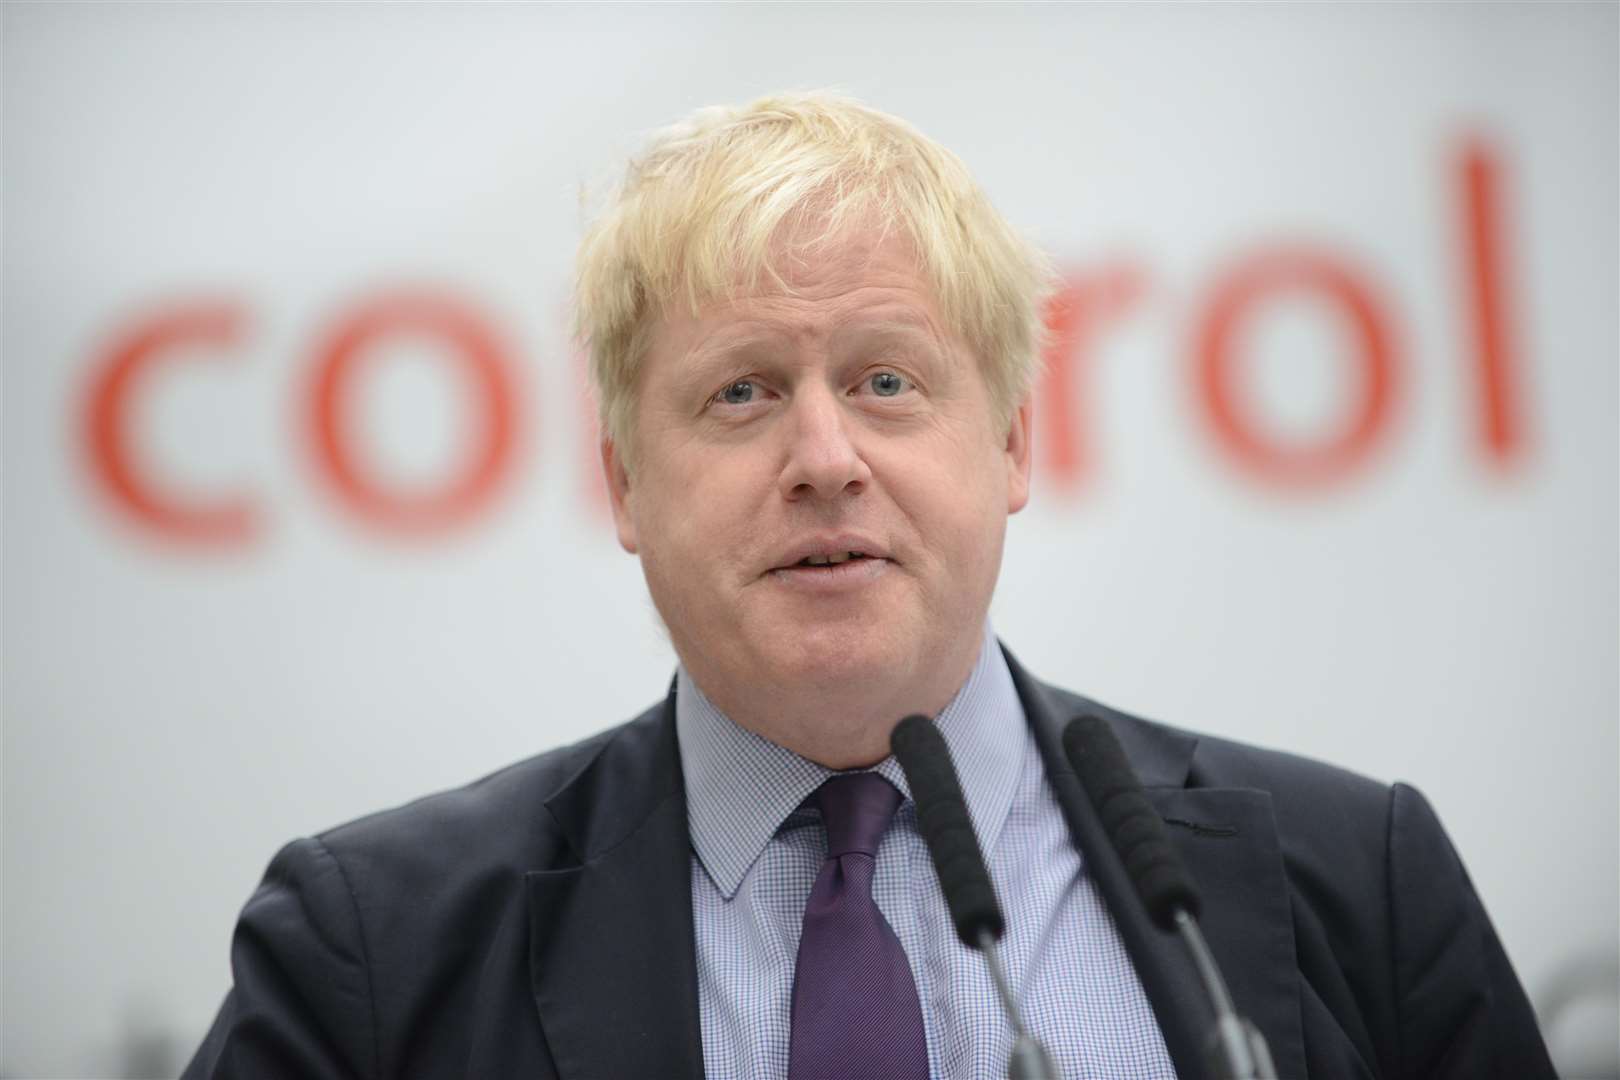 Boris Johnson has resigned as Foreign Secretary